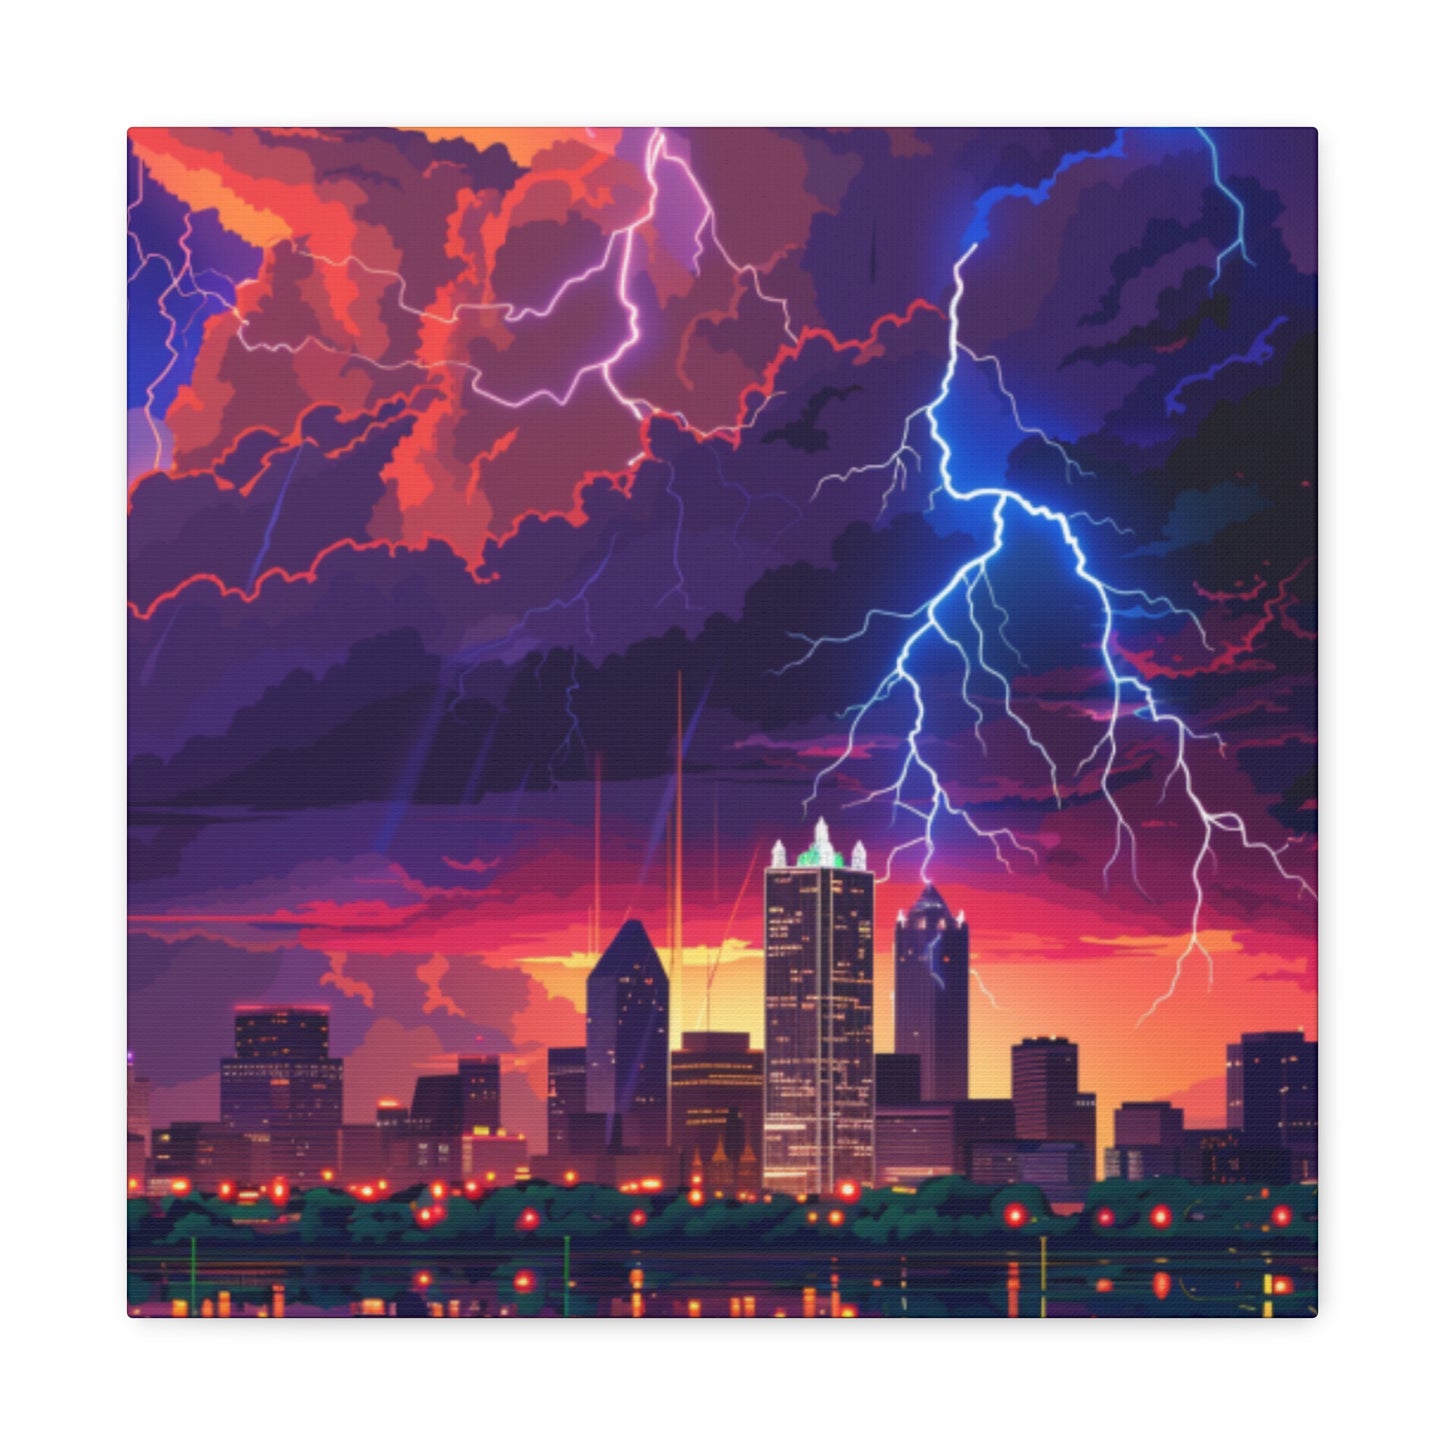 City Storm Canvas Gallery Wraps